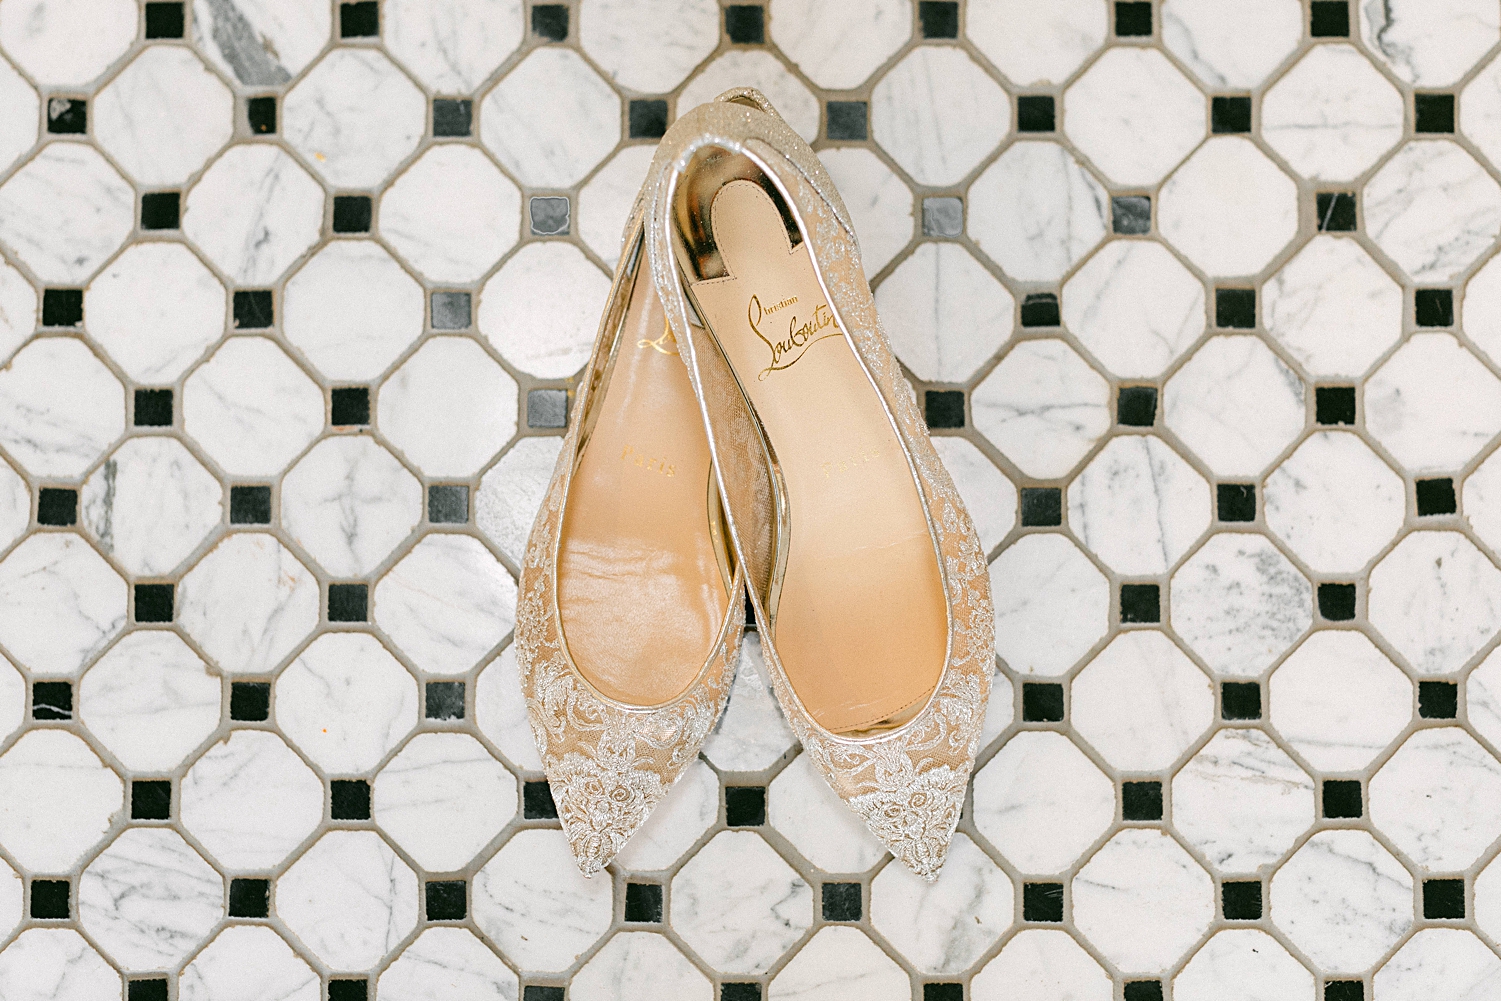 Louboutin flats bridal shoes on tile floor